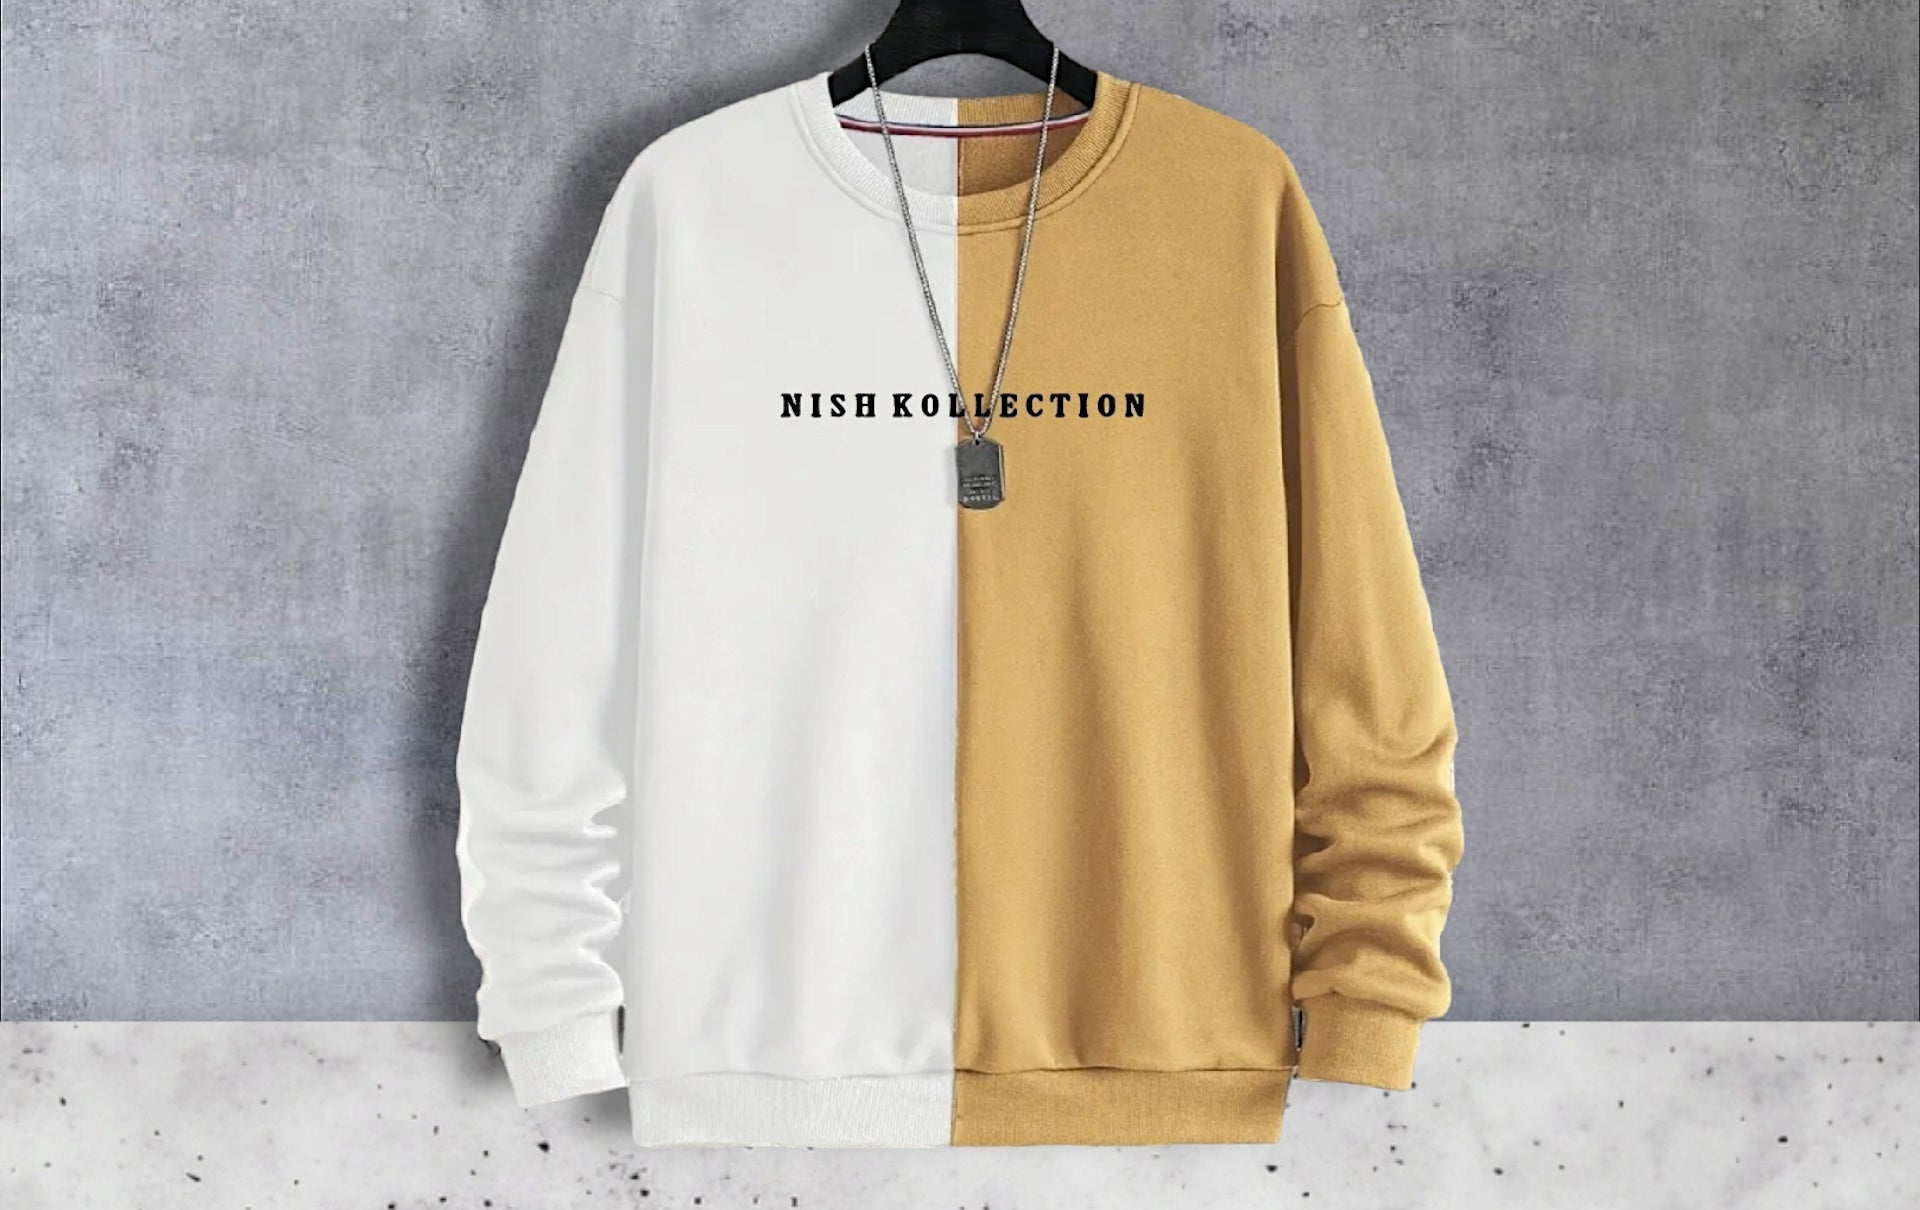 Nish Kollection long sleeve two colour tshirt